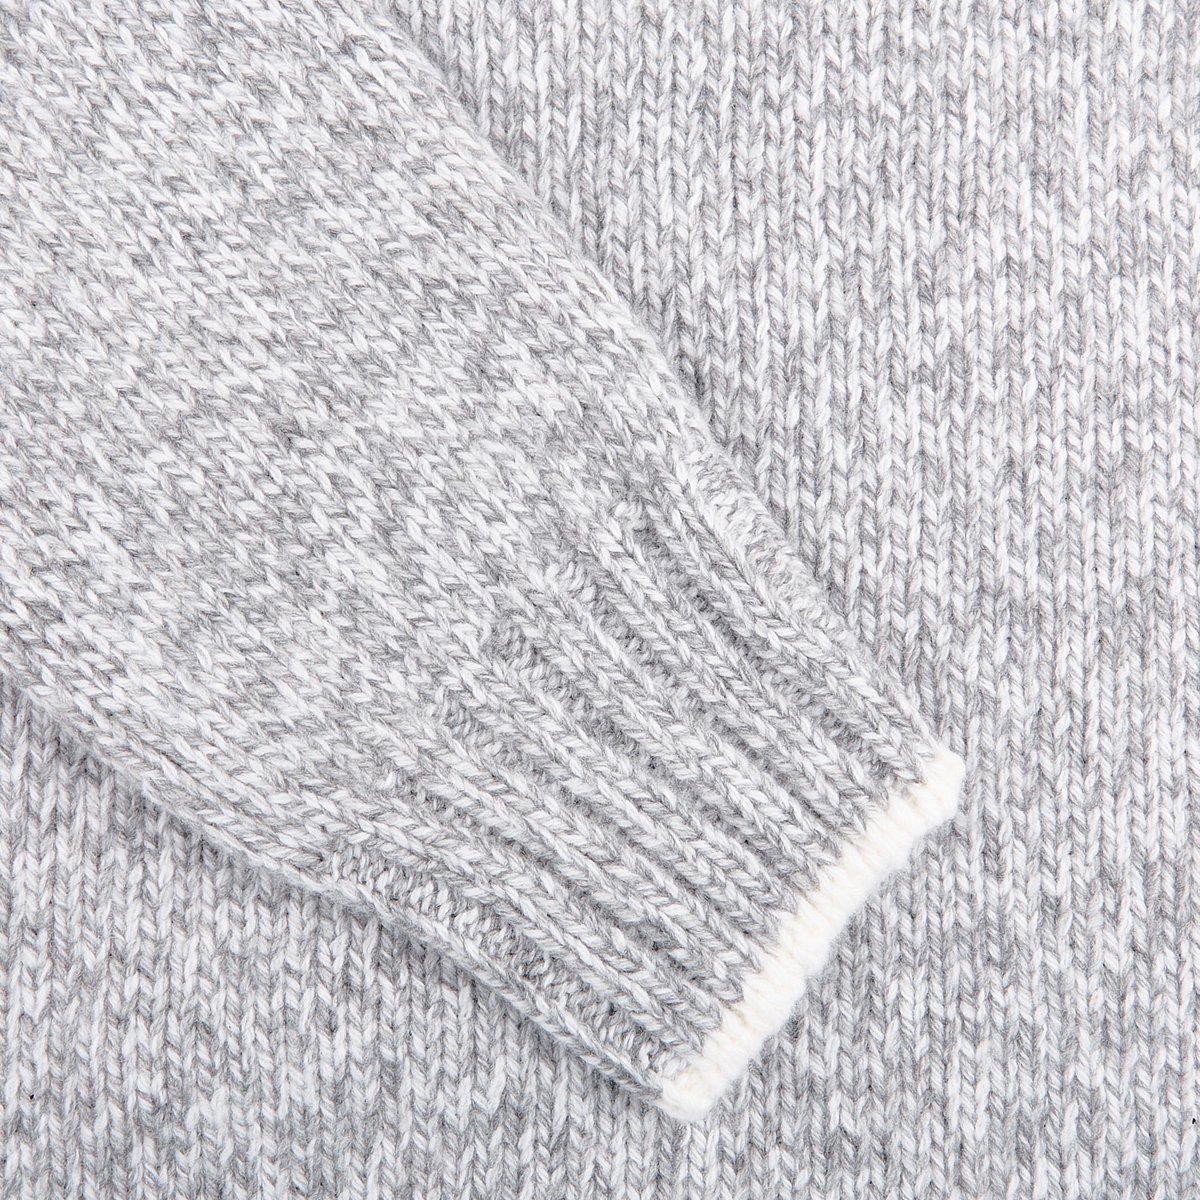 08sircus Wool Cotton melange sweater オンラインストア割 biocheck.cl